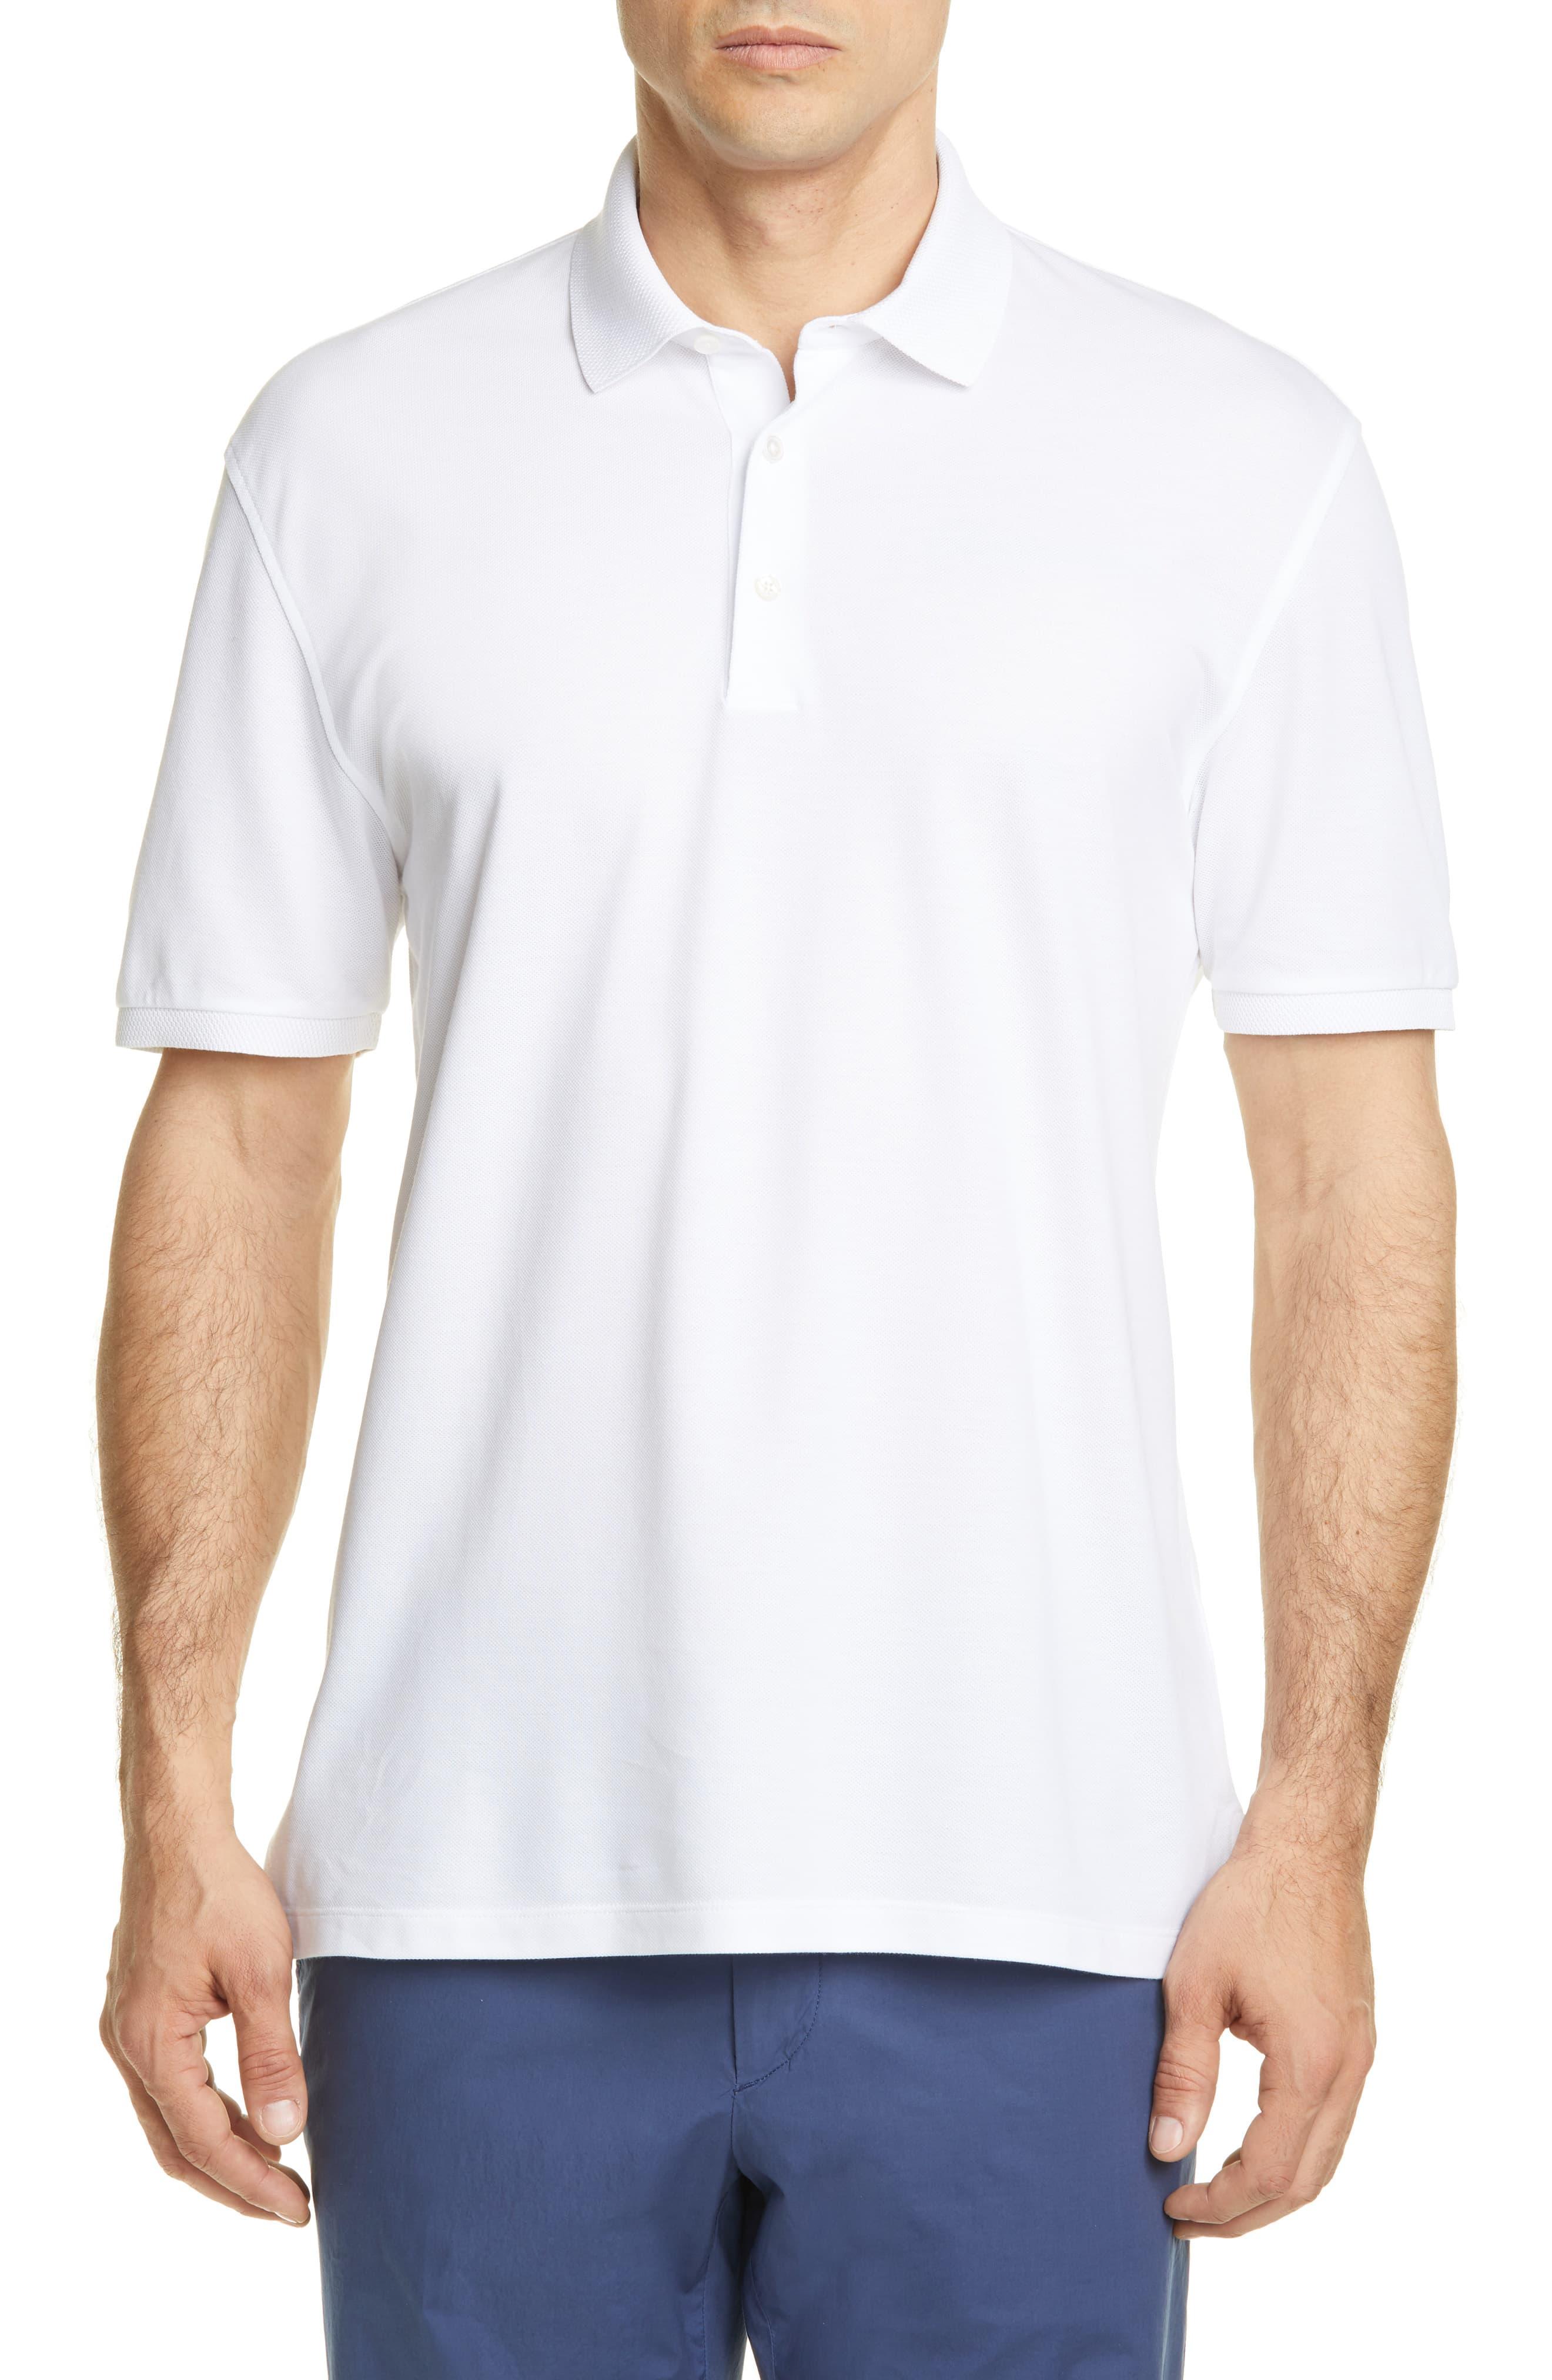 Ermenegildo Zegna Slim Fit Cotton Polo Shirt in White for Men - Lyst